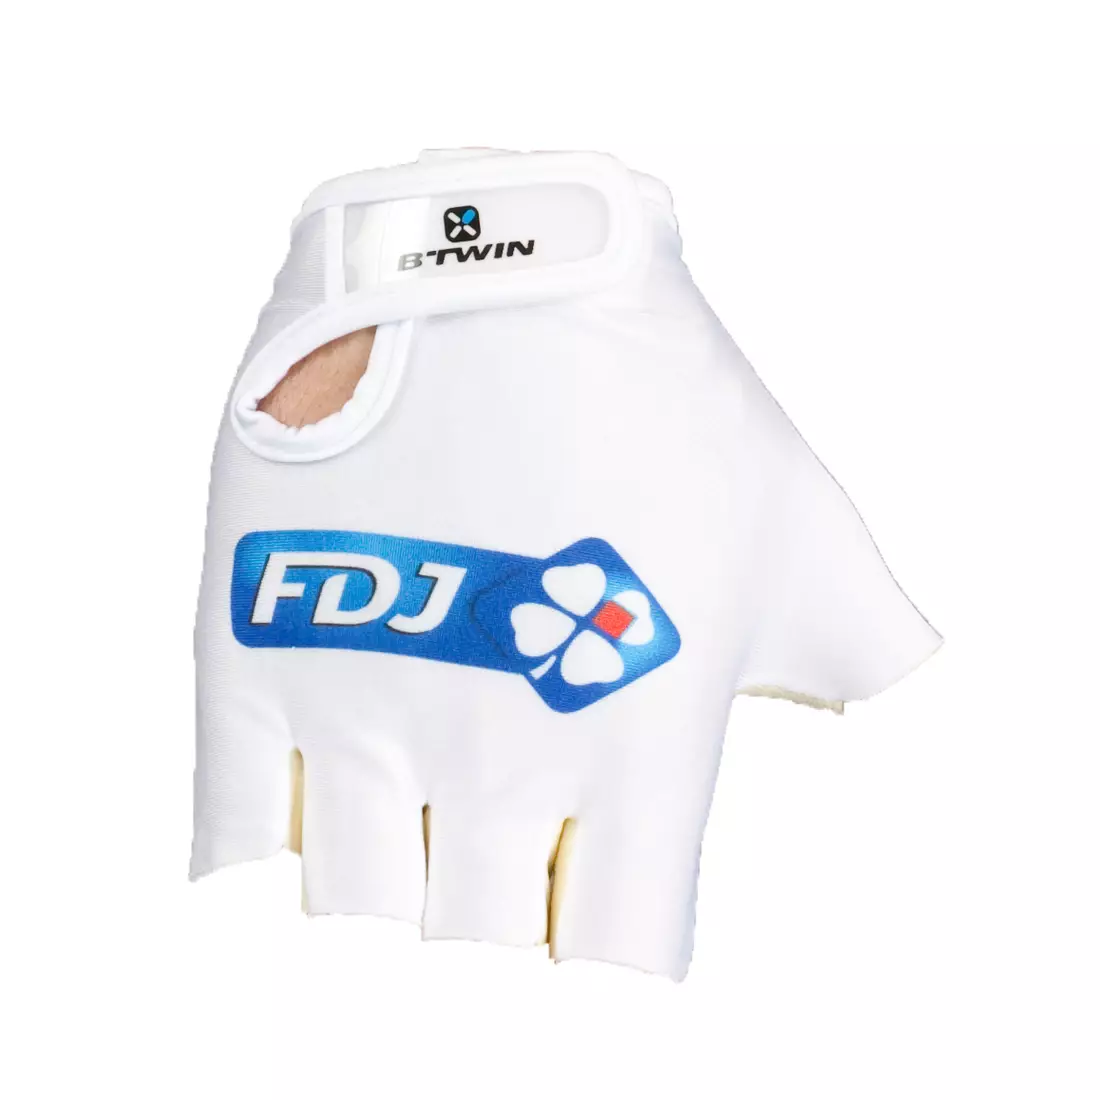 TEAM FDJ 2016 cycling gloves